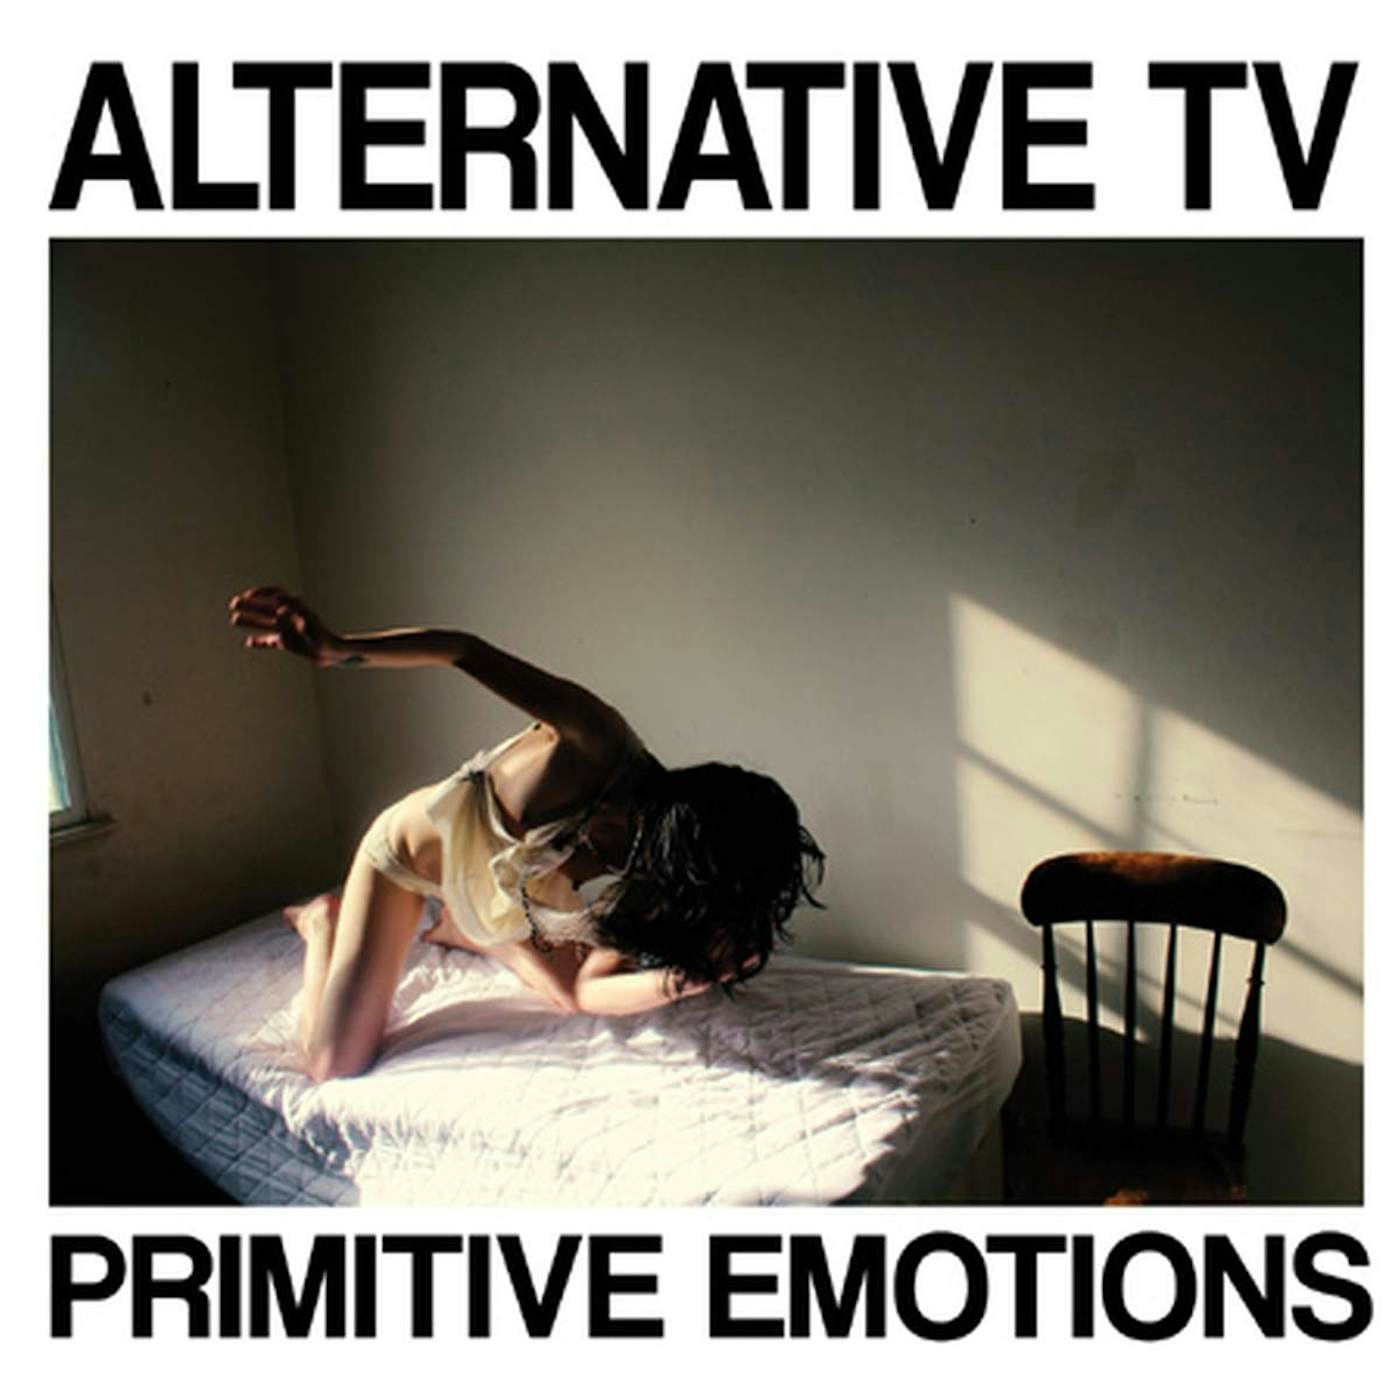 Alternative TV PRIMITIVE EMOTIONS CD